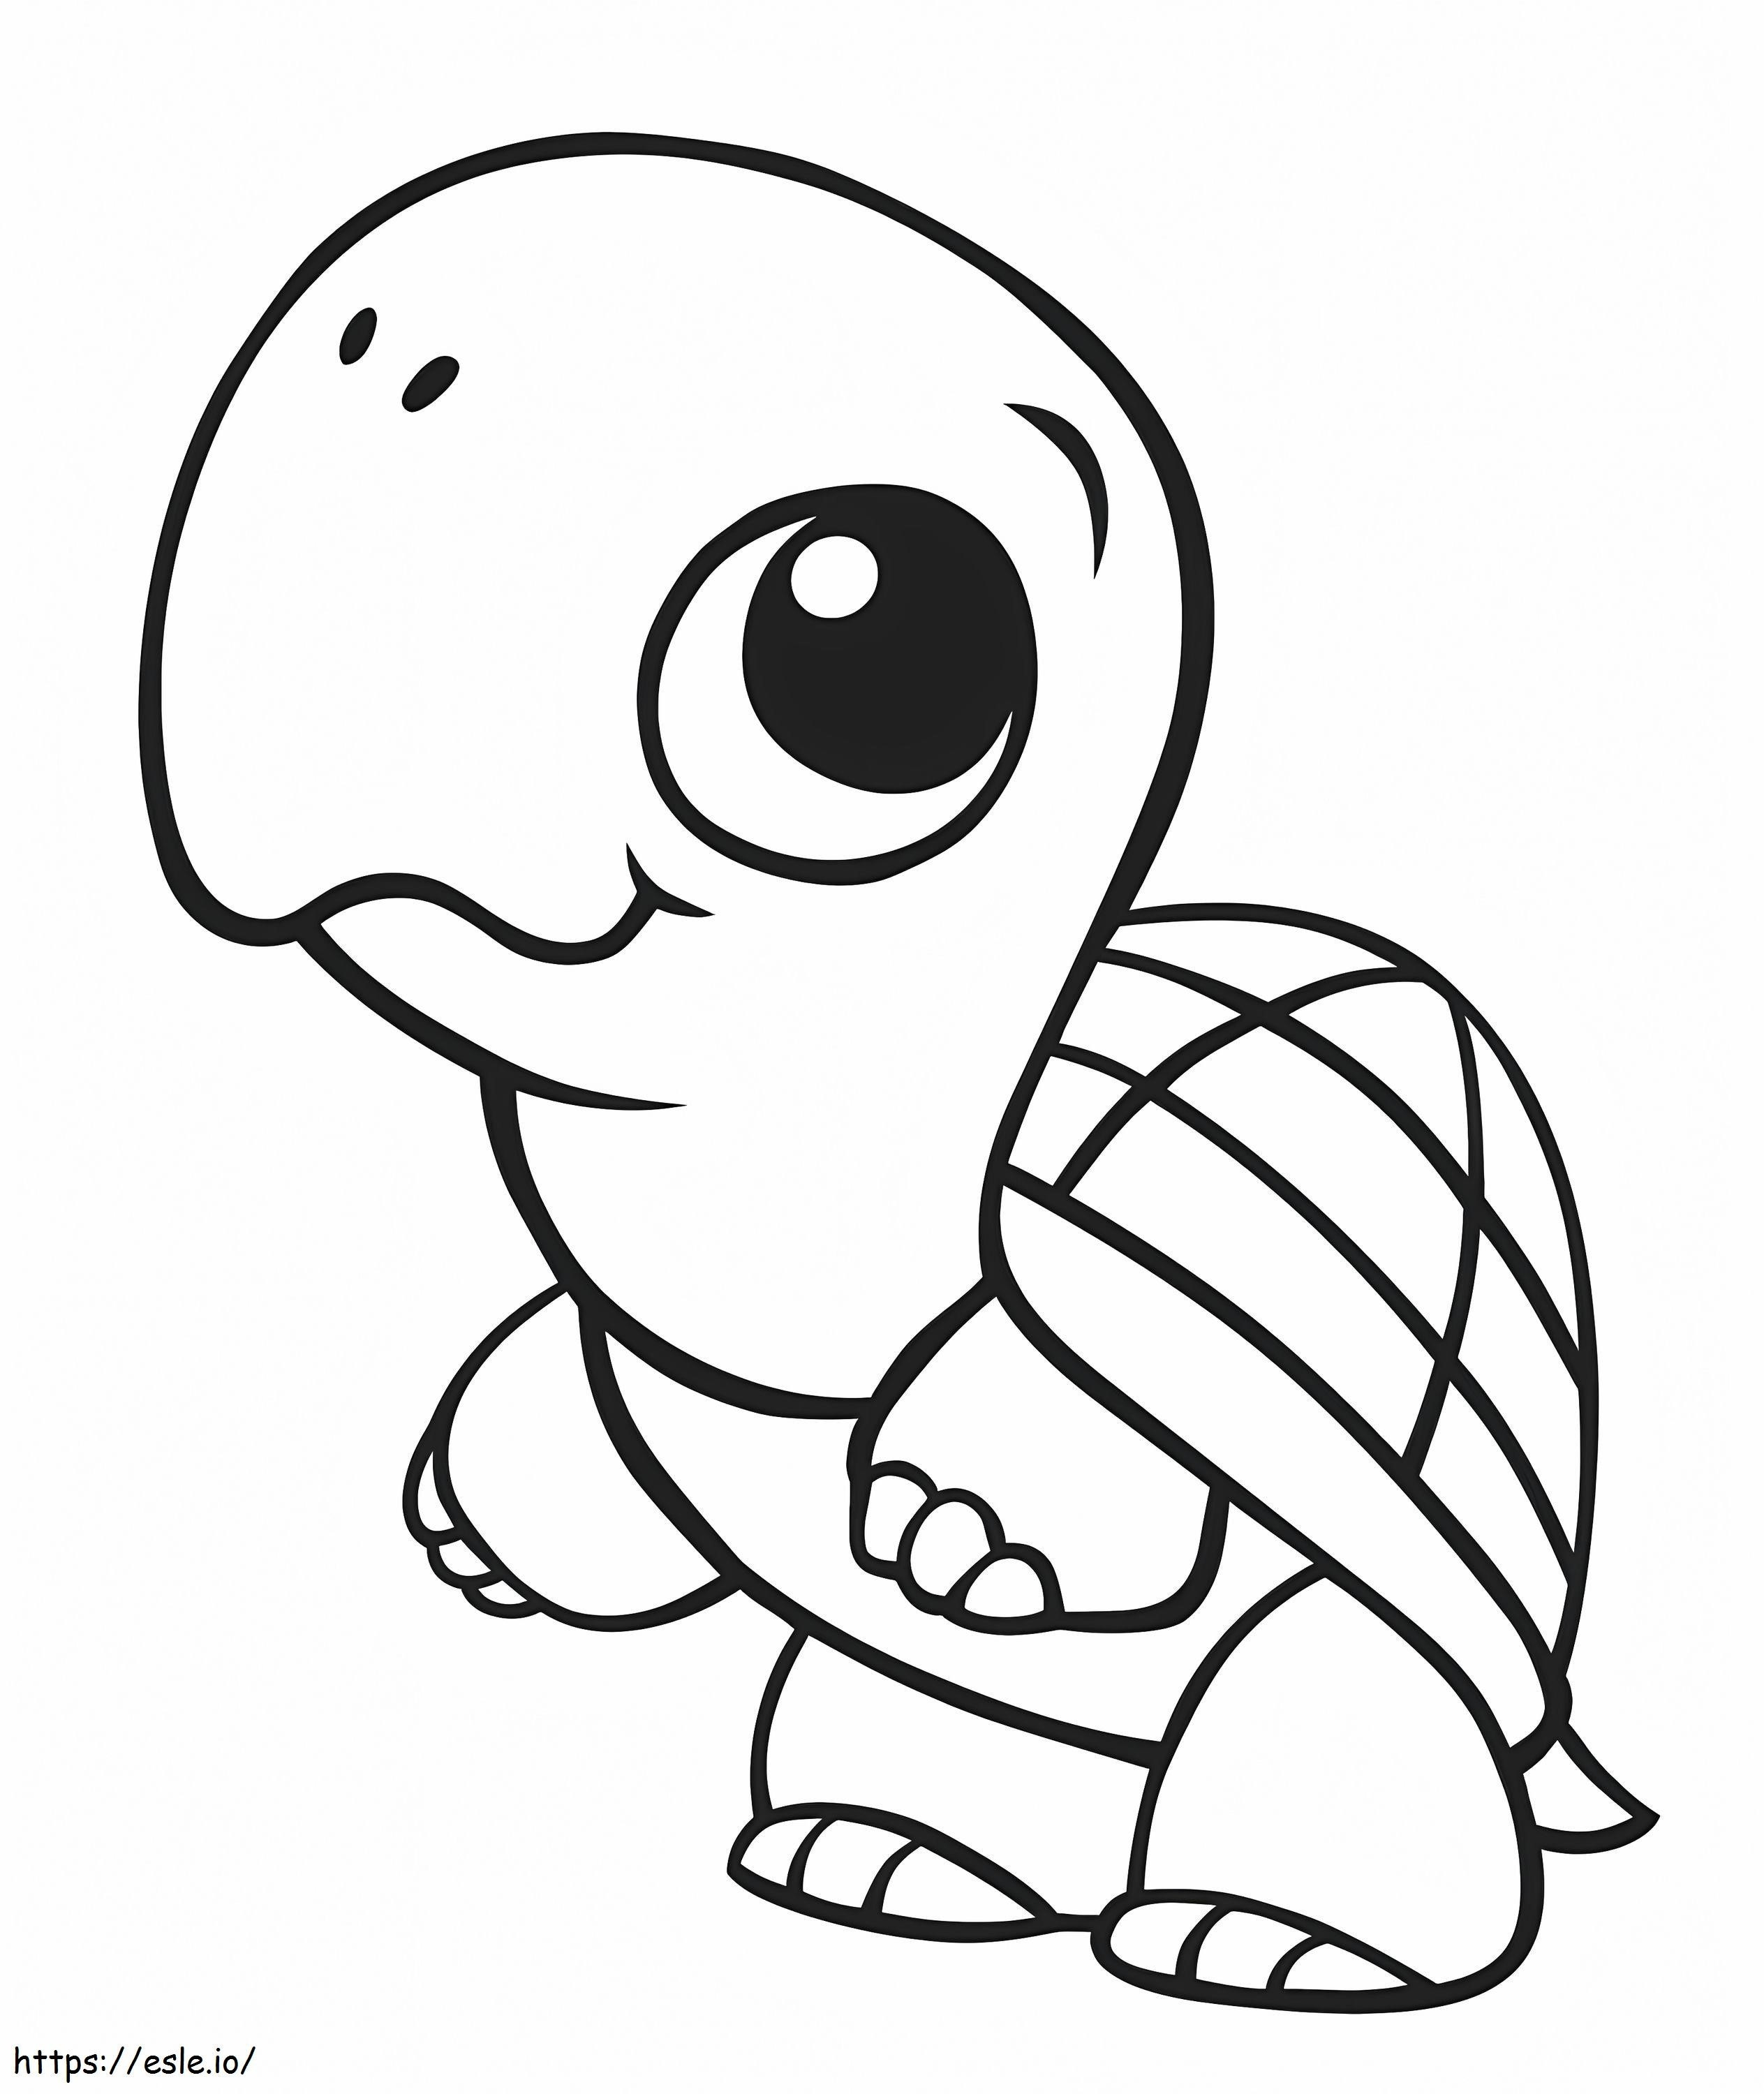  Süße Babyschildkröte A4 ausmalbilder